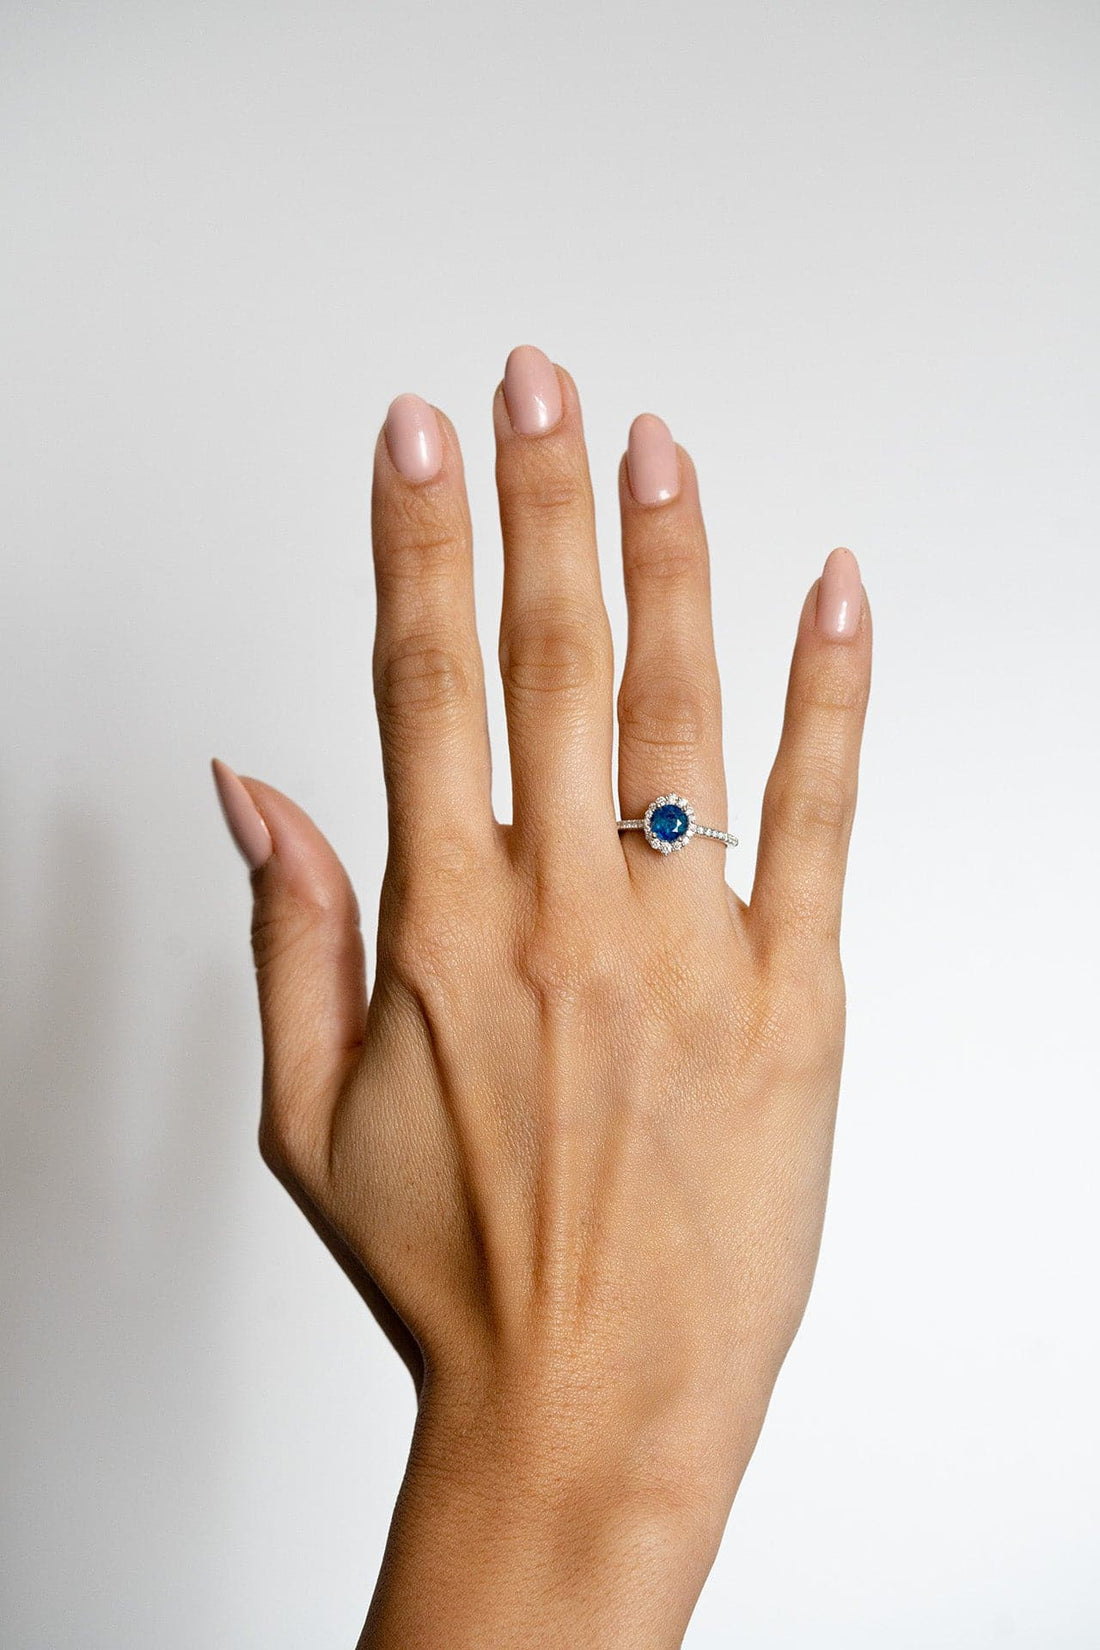 Sapphire and Diamond Halo Ring - Skeie's Jewelers